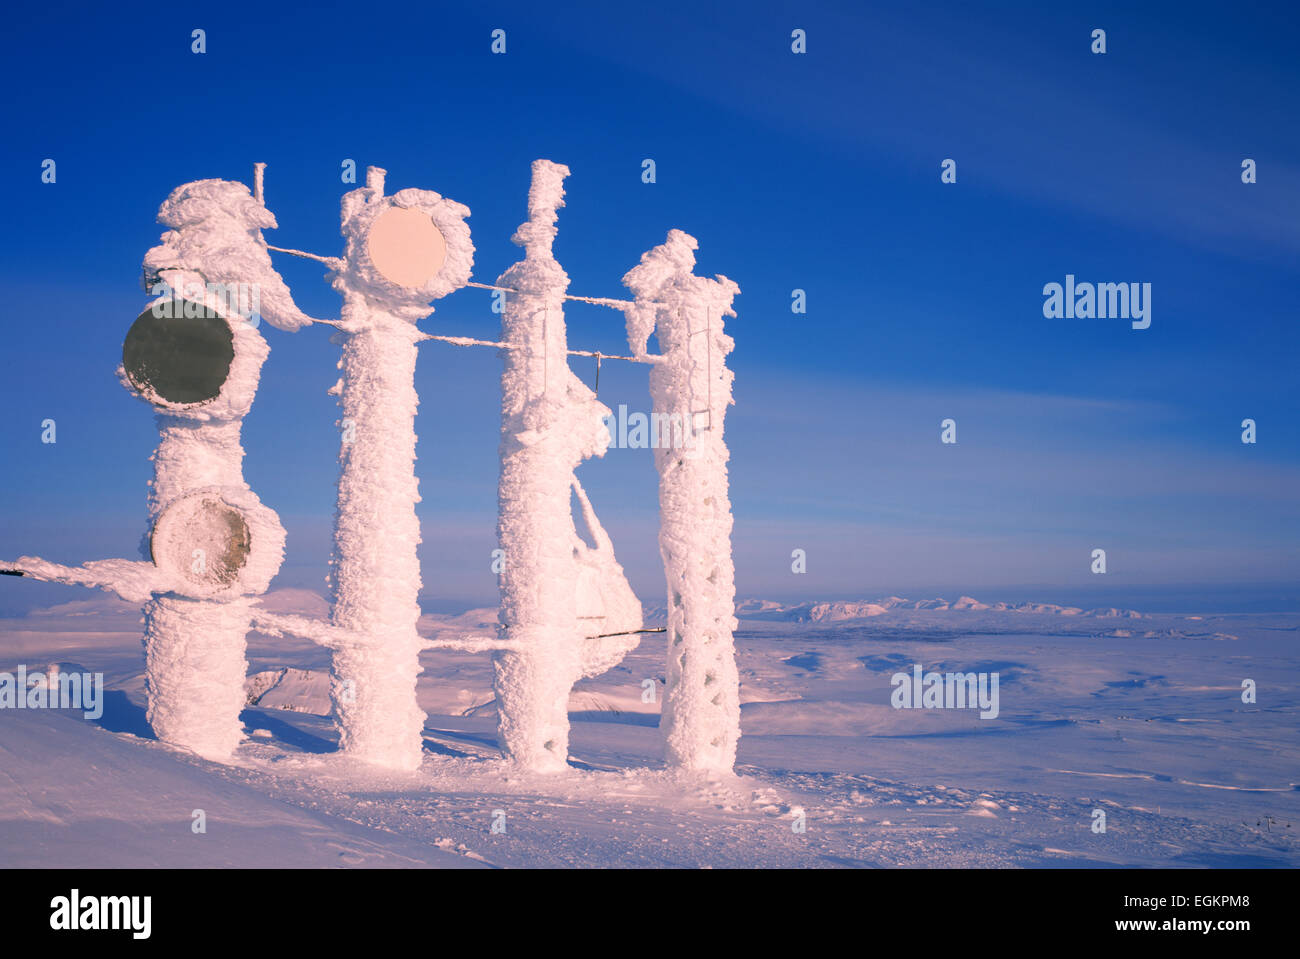 Schnee und Eis bedeckt Telekommunikation Türme, Skalafell Berg, Island Stockfoto